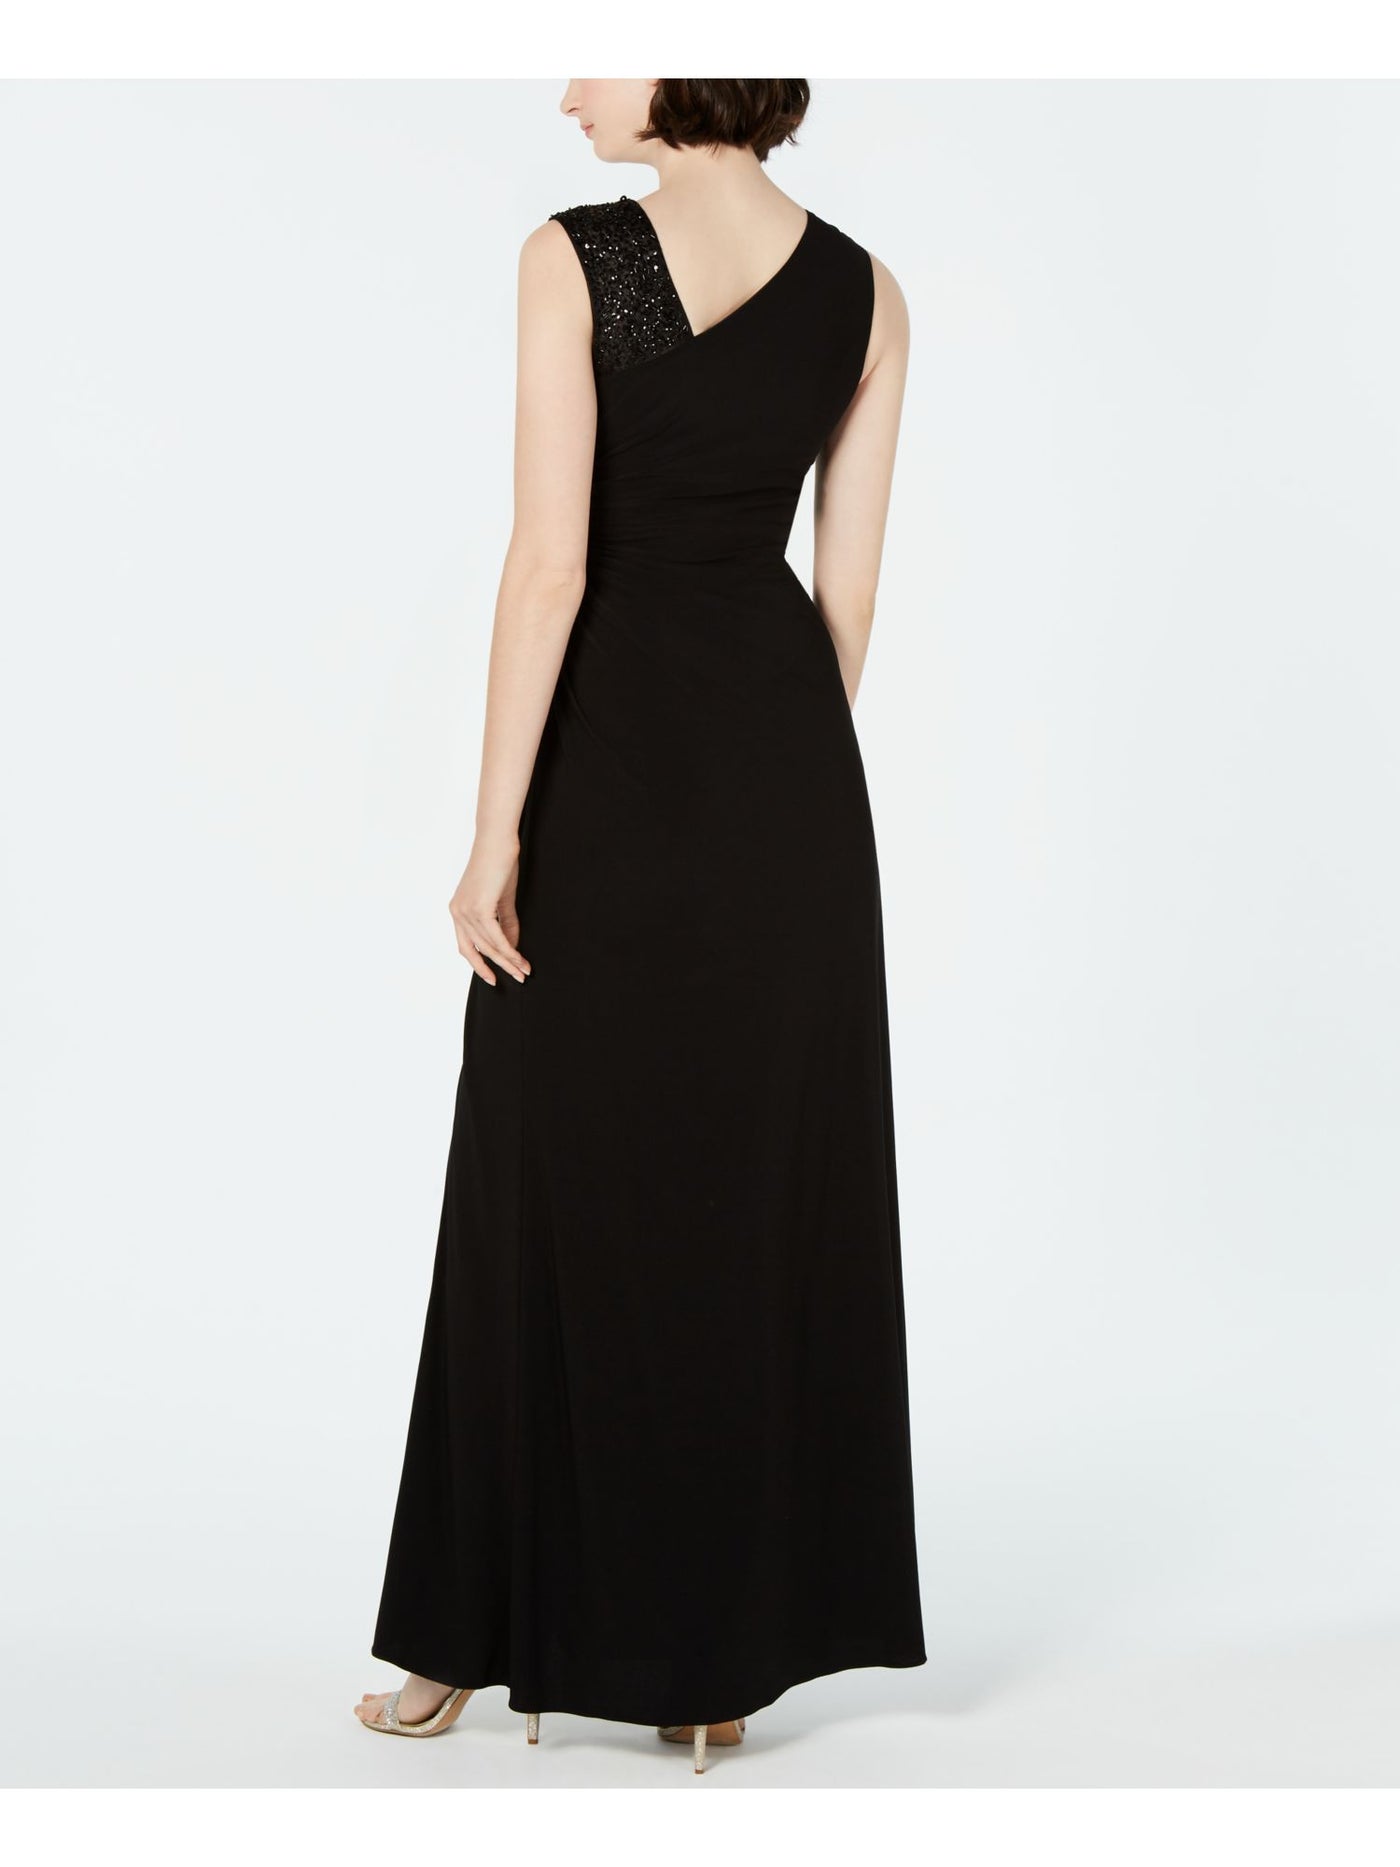 ADRIANNA PAPELL Womens Black Sequined Sleeveless Jewel Neck Maxi Evening Sheath Dress 4